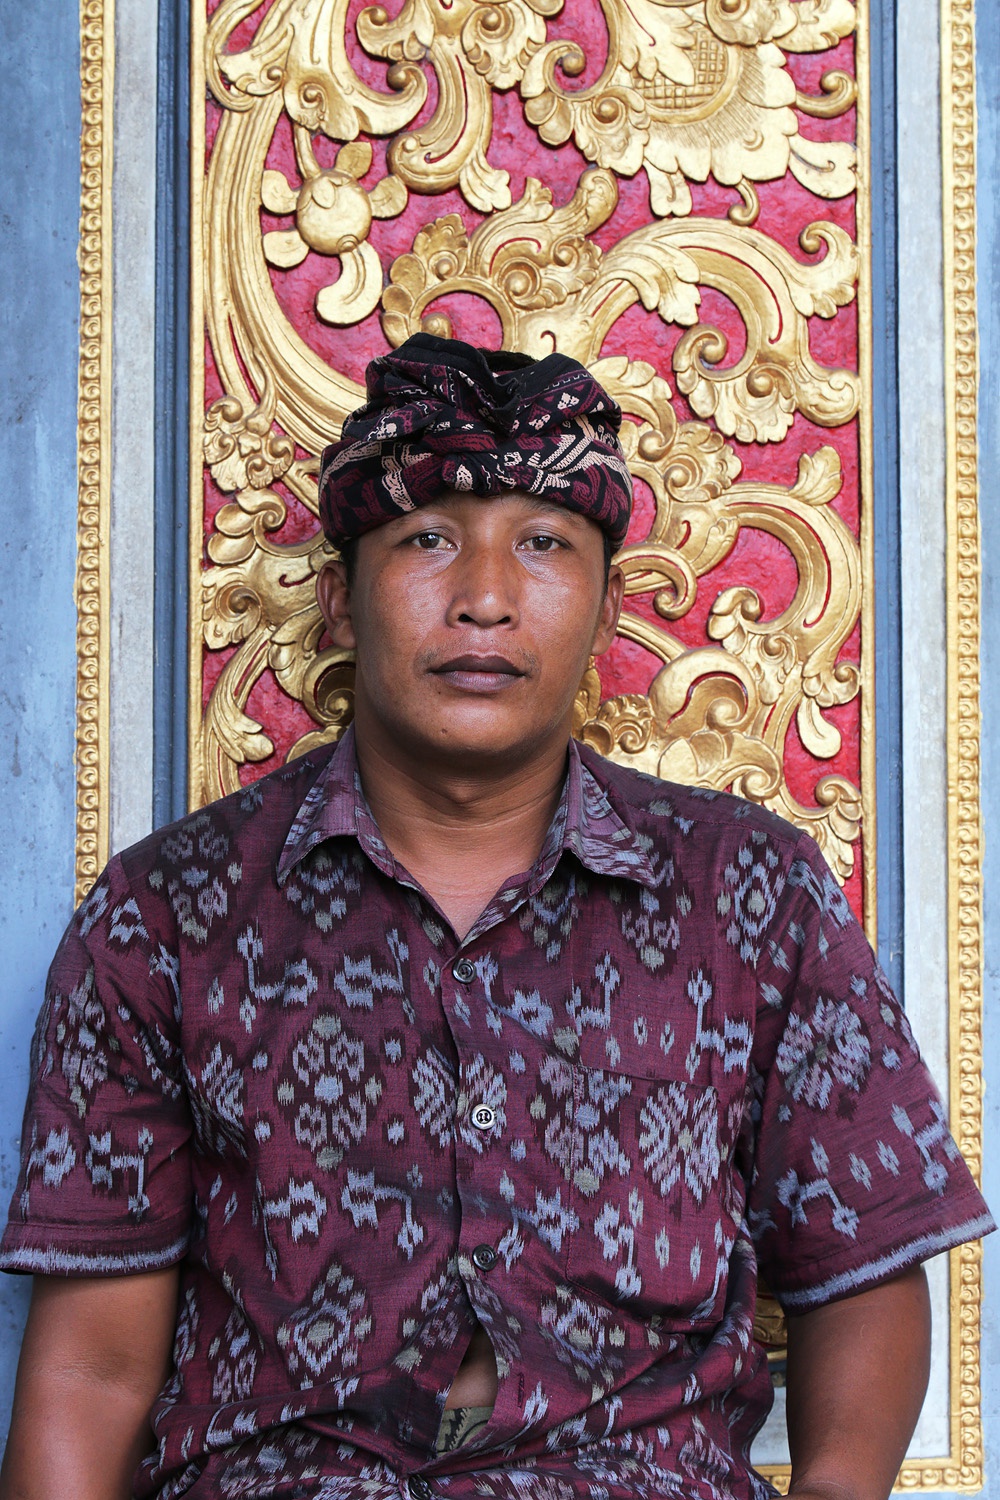 bill-hocker-ubud-museum-ubud-bali-indonesia-2016